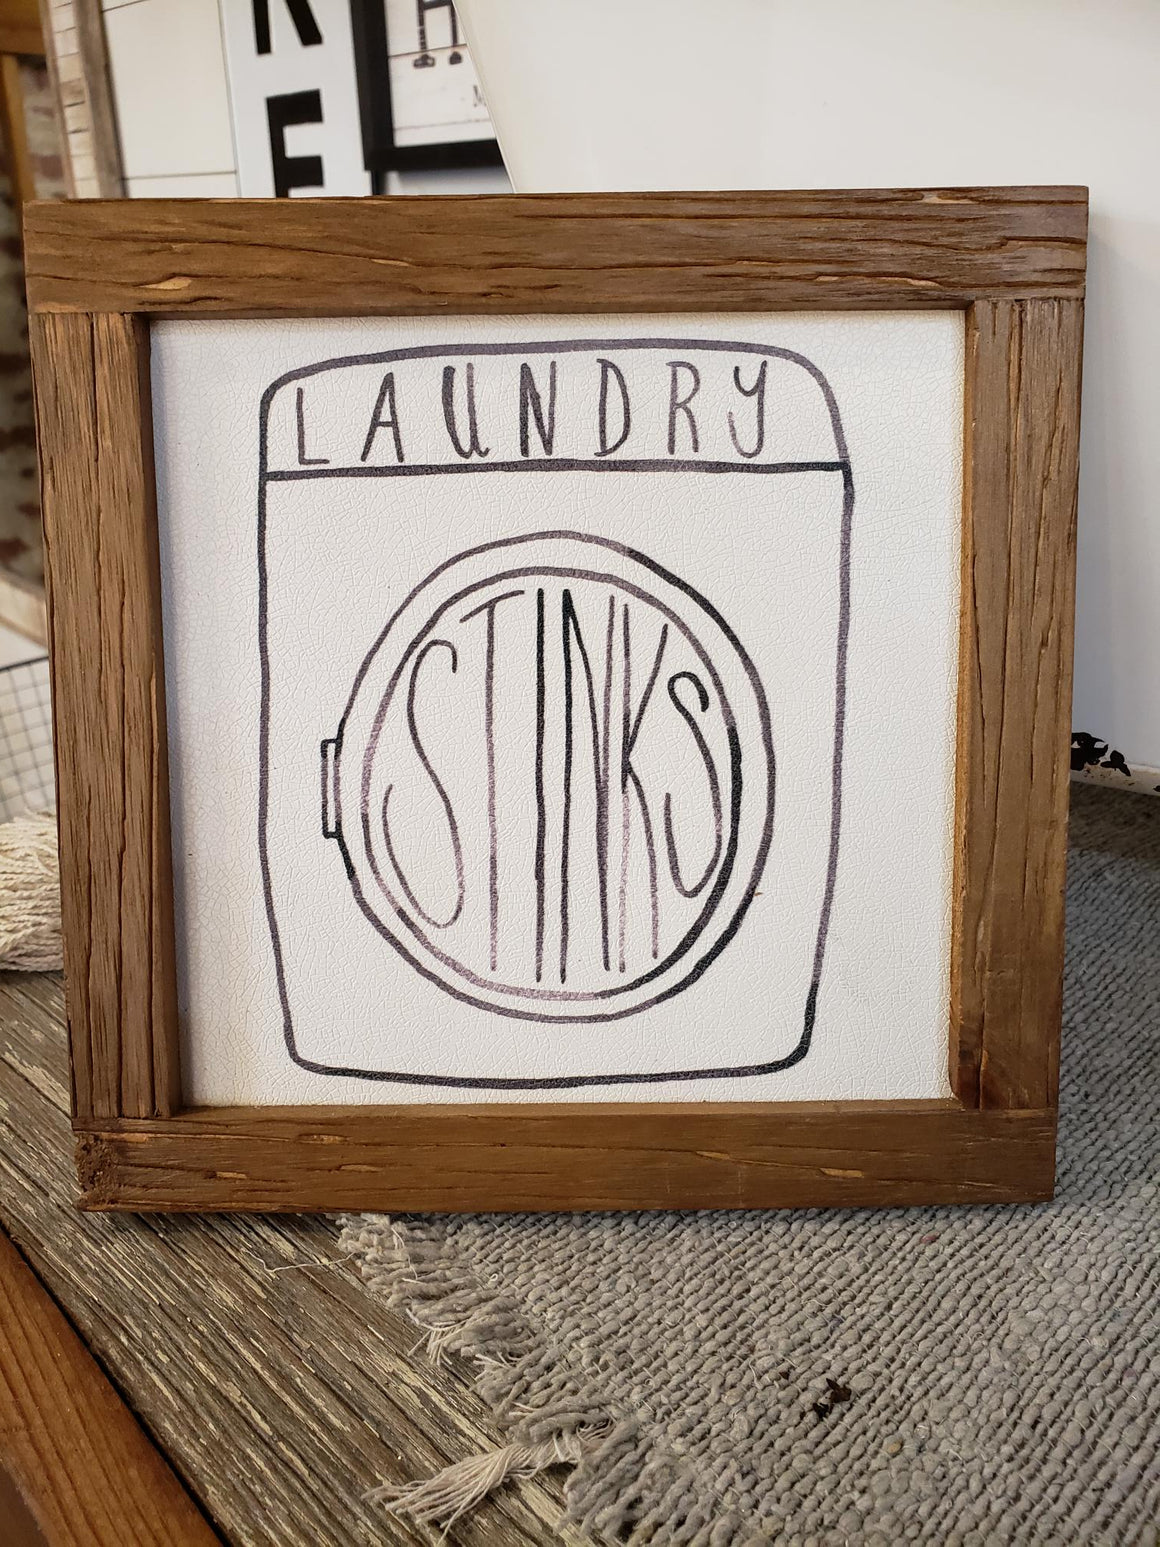 Laundry Stinks Sign